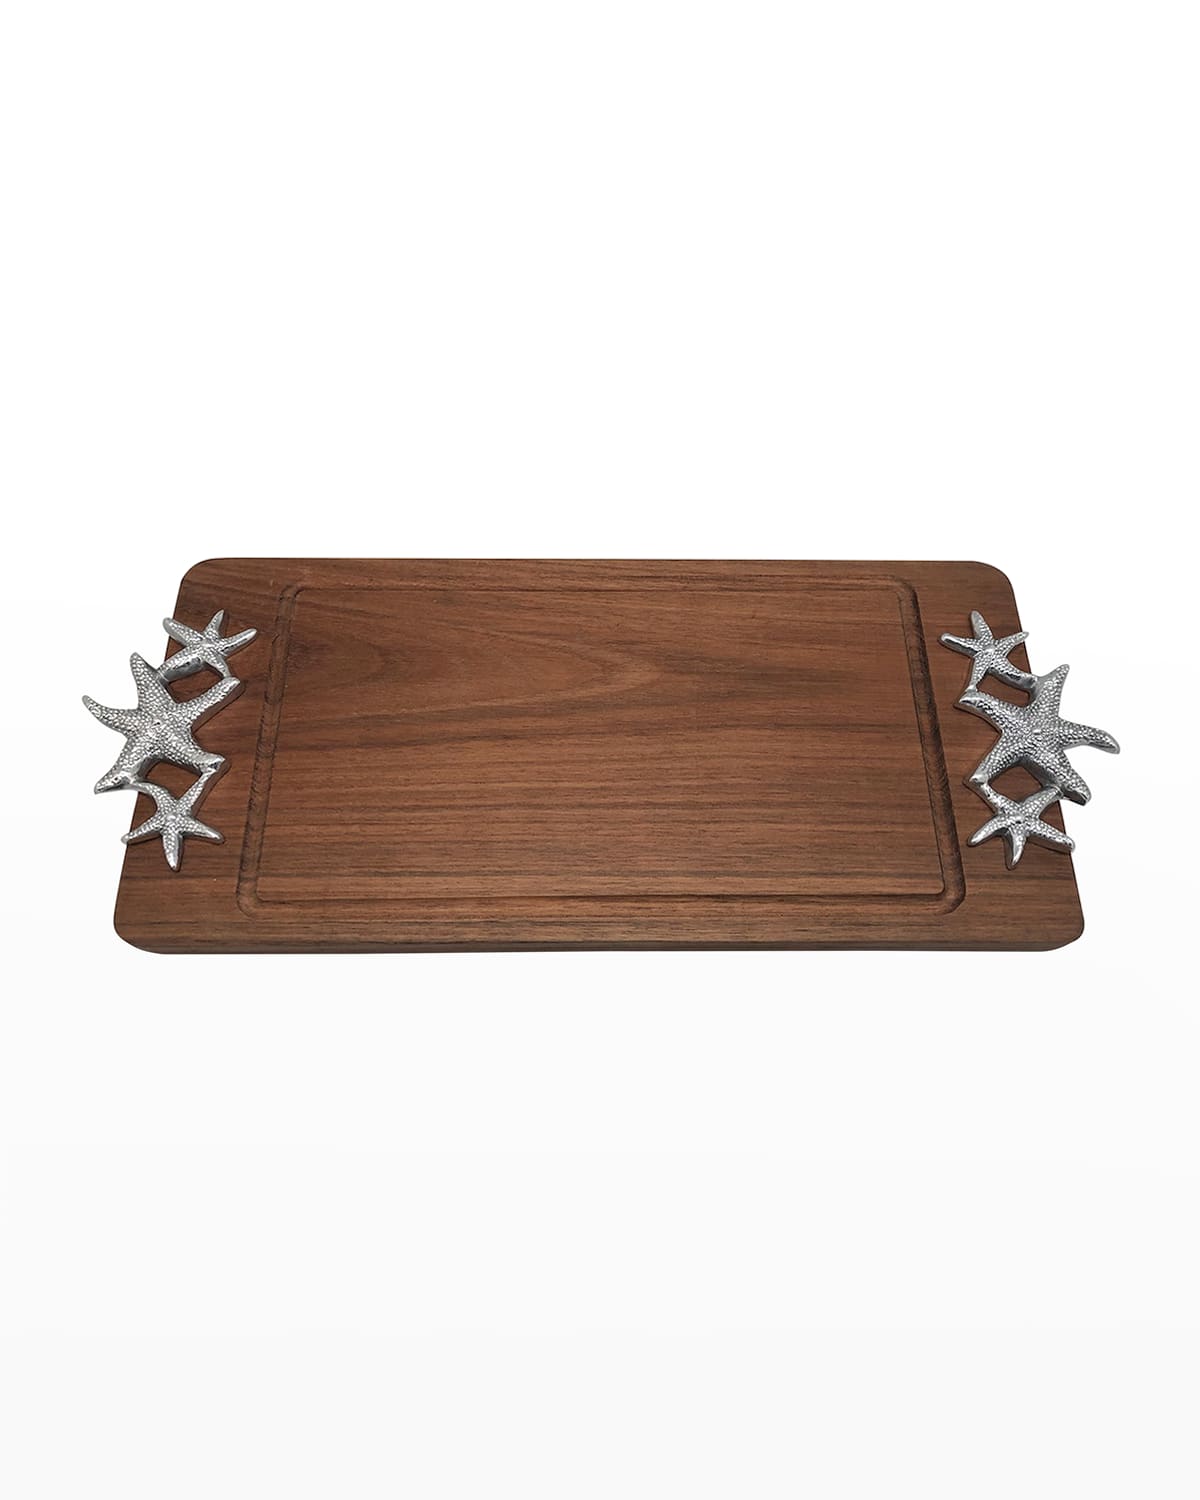 Shop Mariposa Dark Wood Tray With Starfish Handles